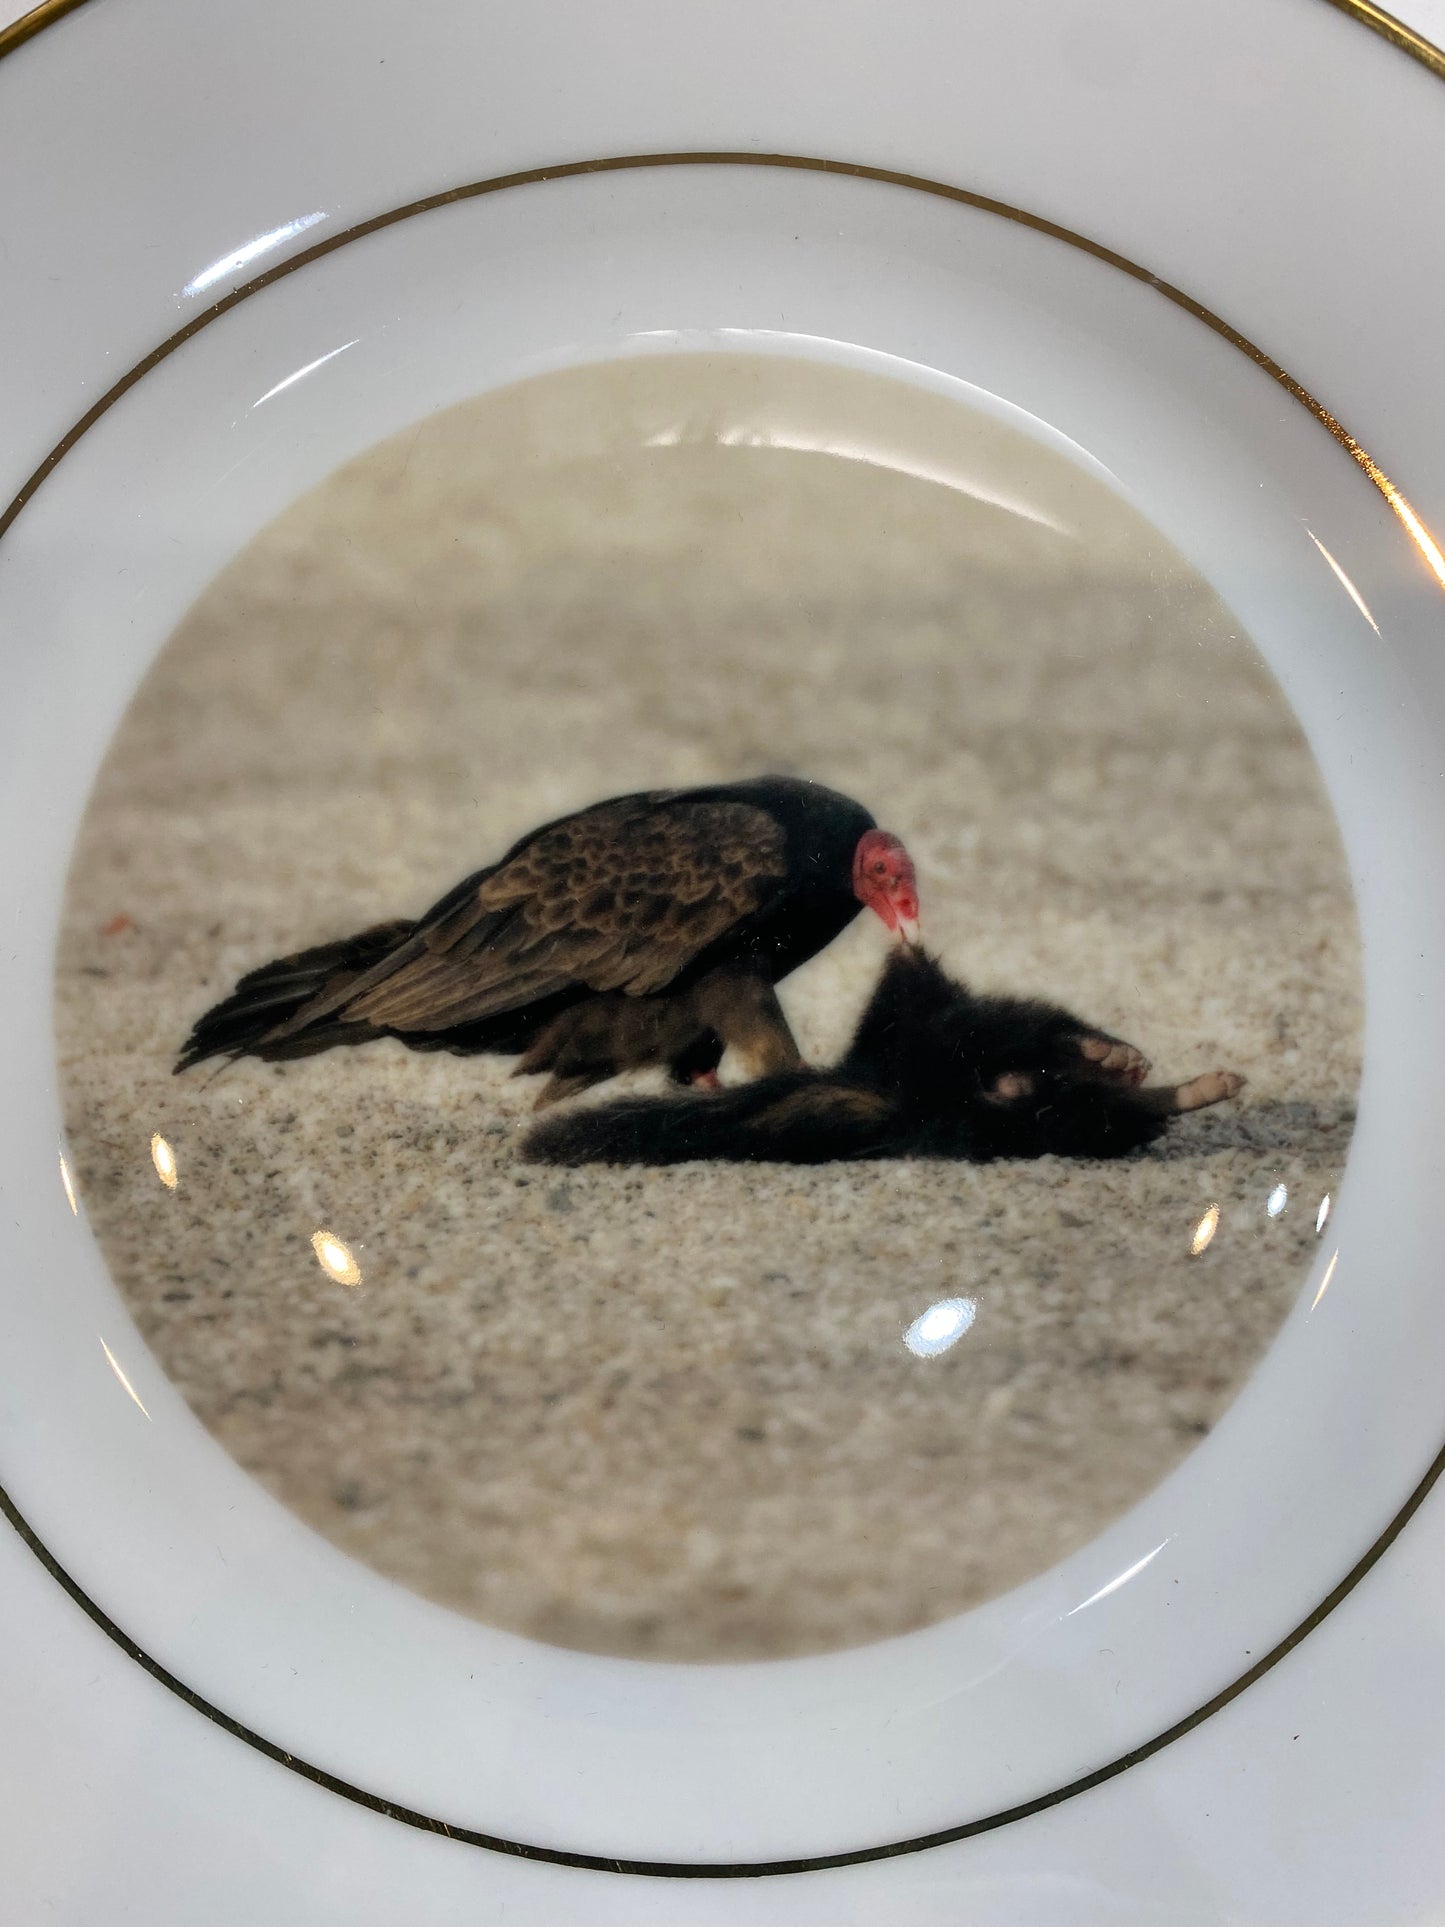 Scenes from Nature: Turkey Vulture Eats Roadkill Skunk